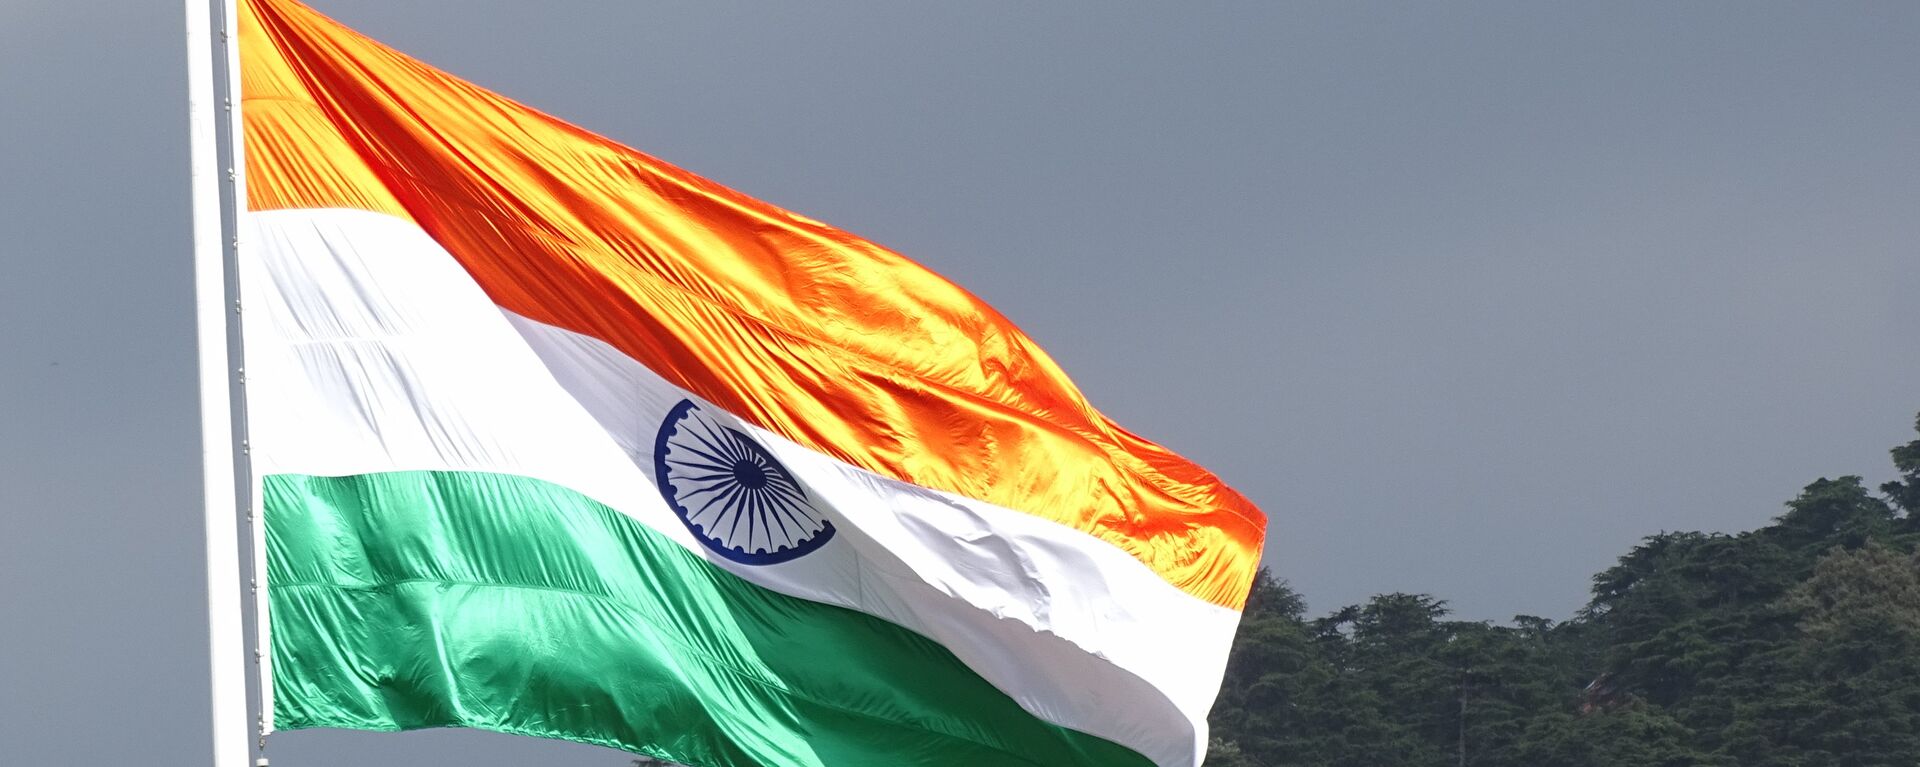 Bandera de la India - Sputnik Mundo, 1920, 06.09.2021